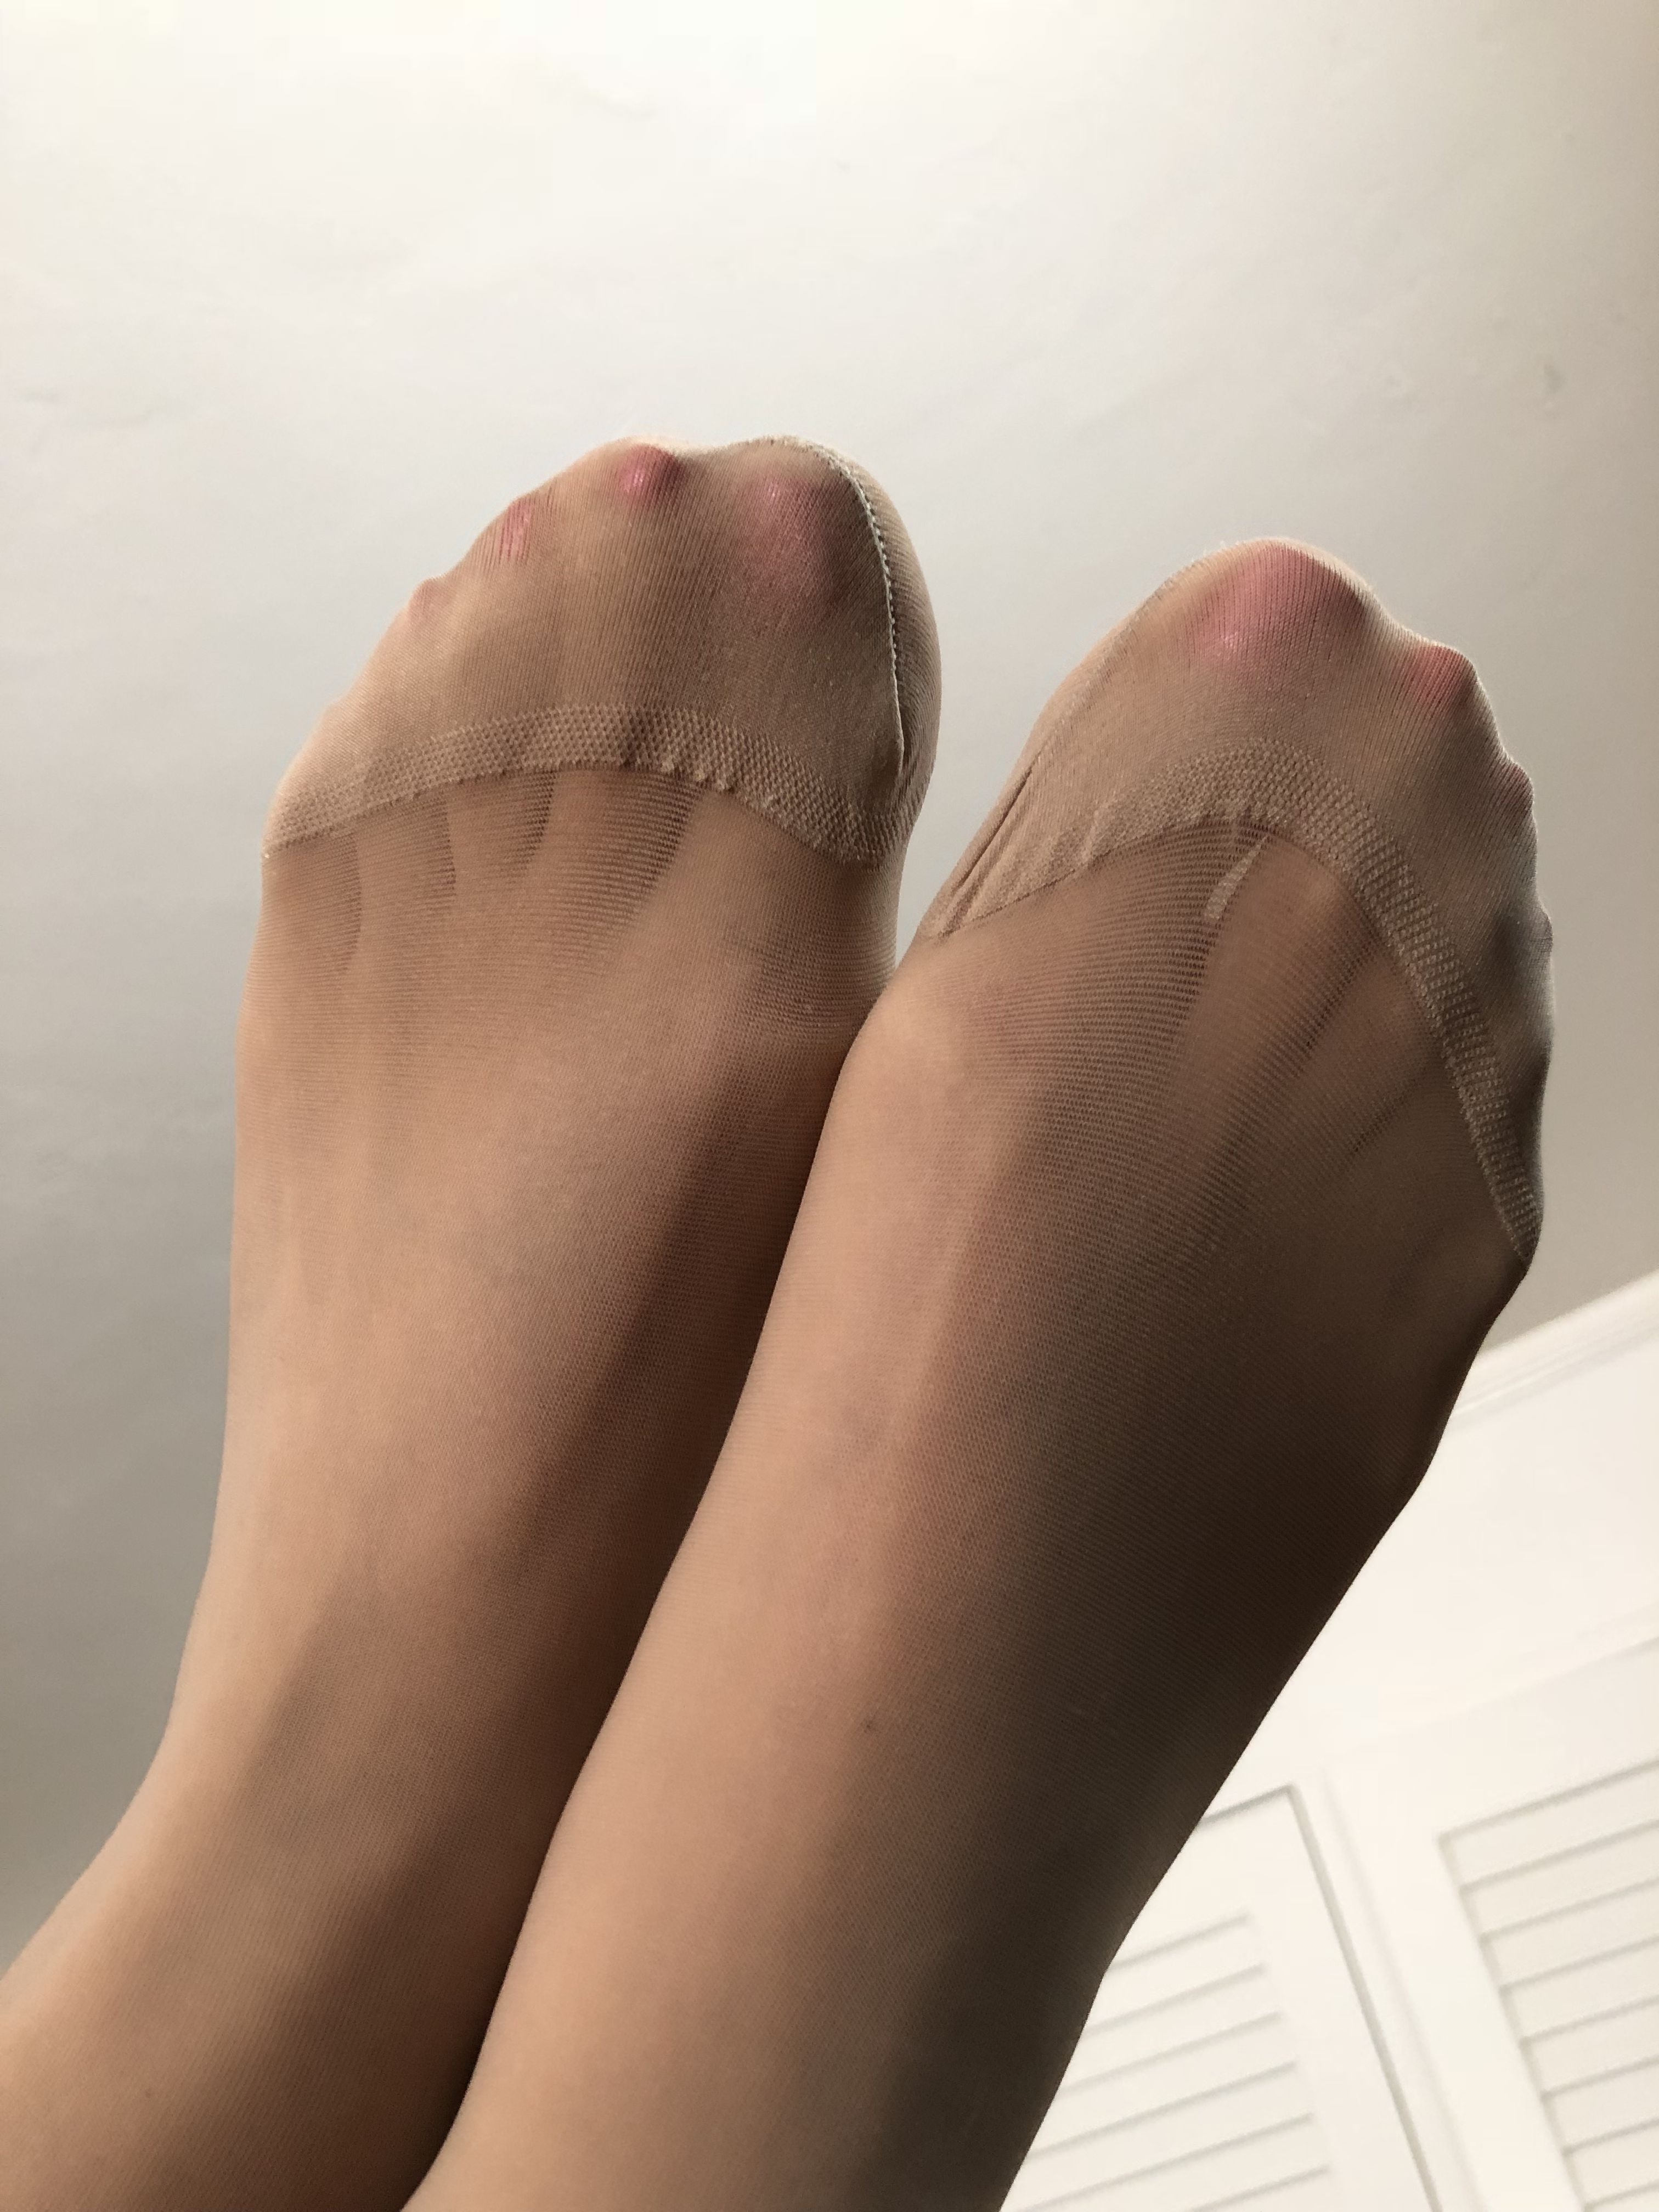 Reinforced toe pantyhose foot